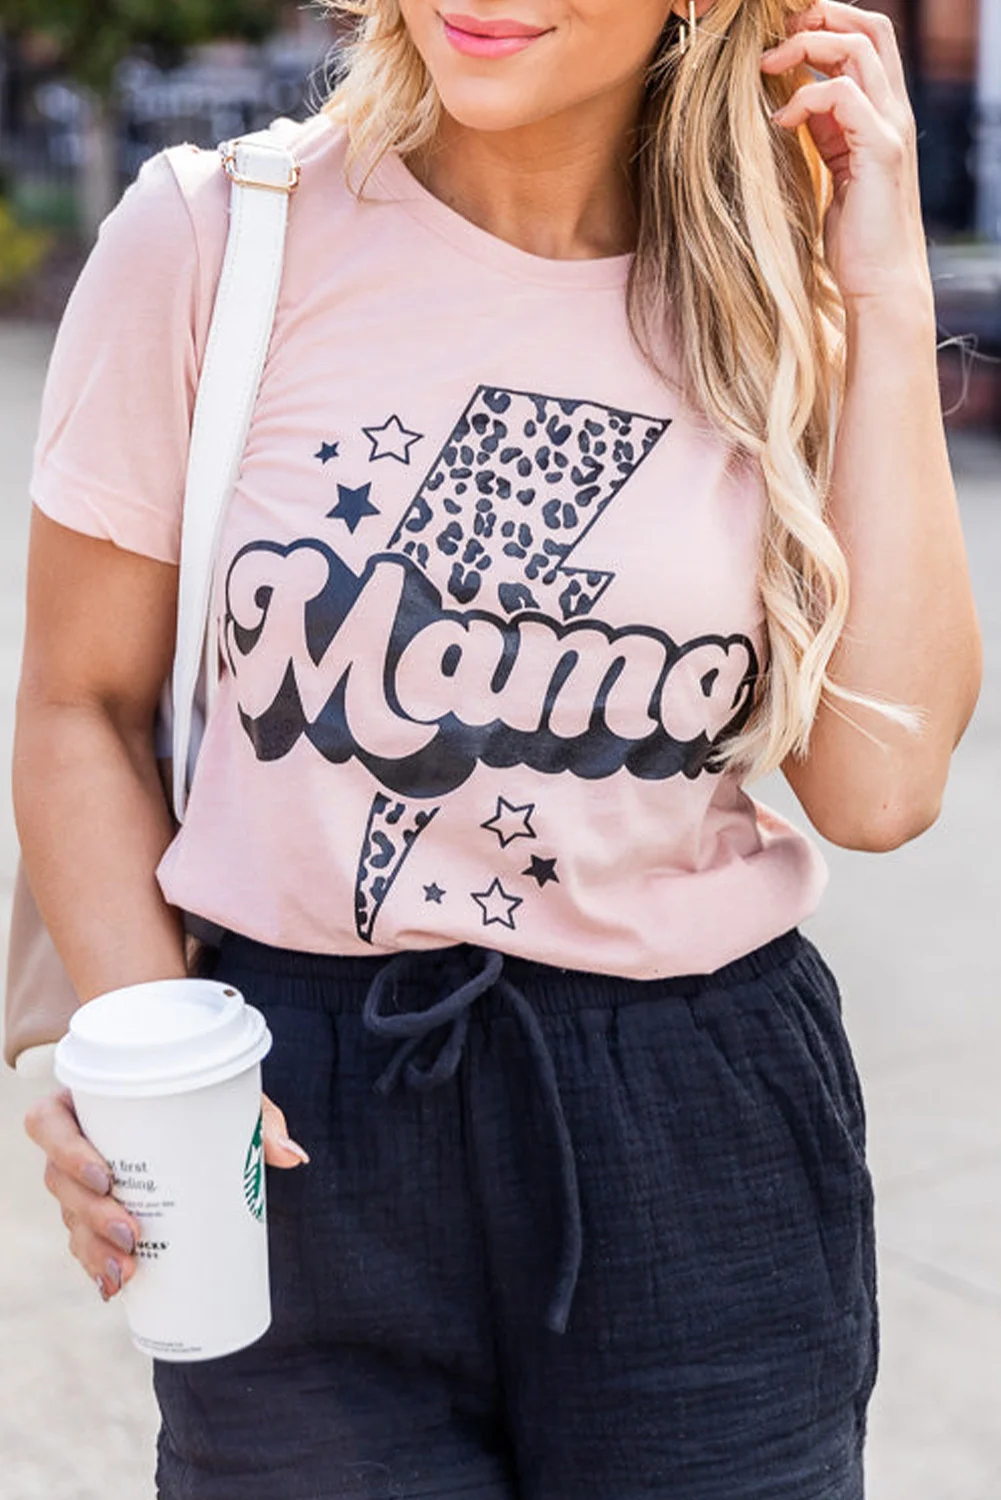 Pink Leopard Star Lightweight Short Sleeve Graphic T Shirt | IFYHOME